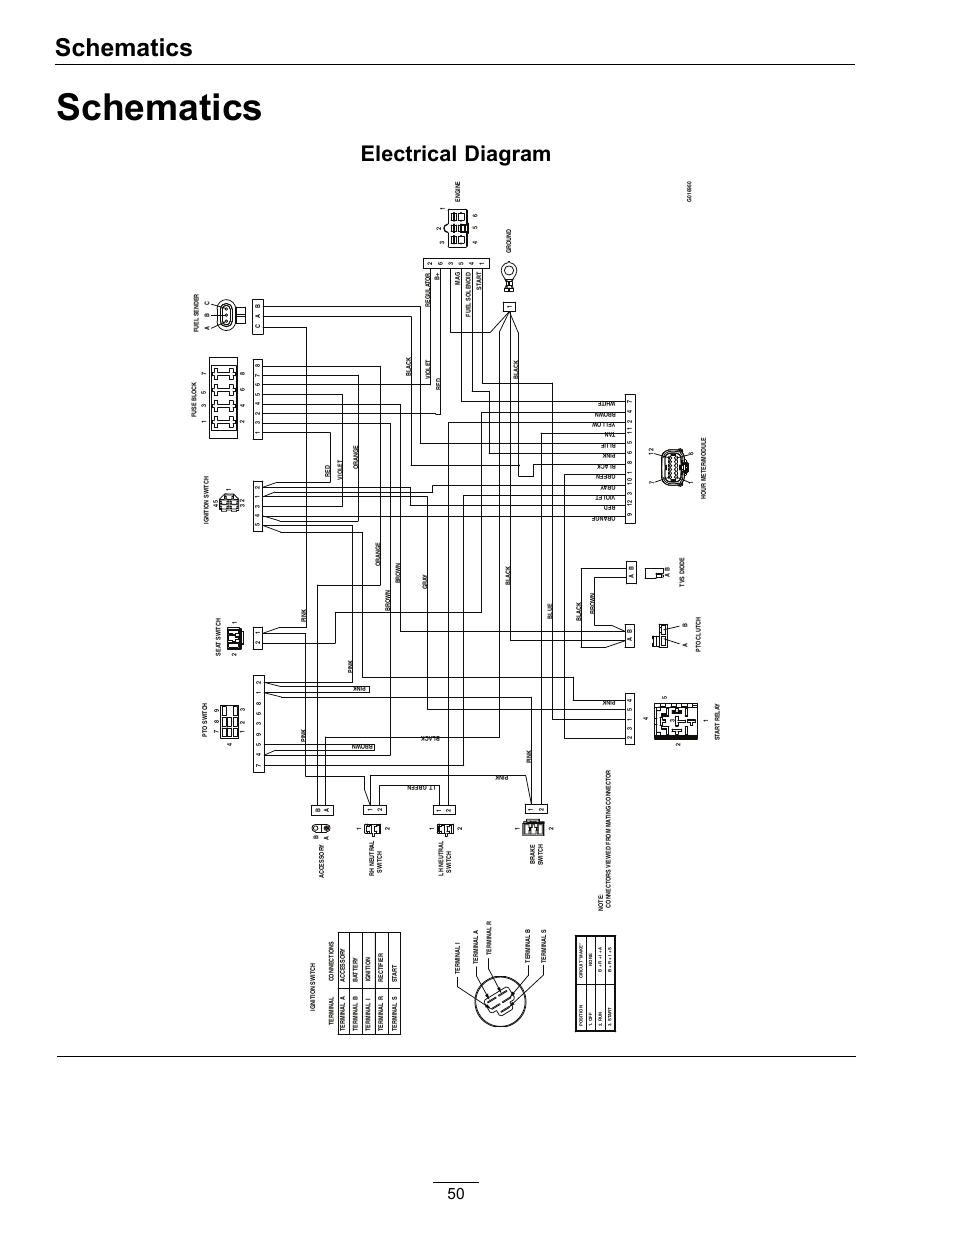 parrot ck3000 evo wiring diagram